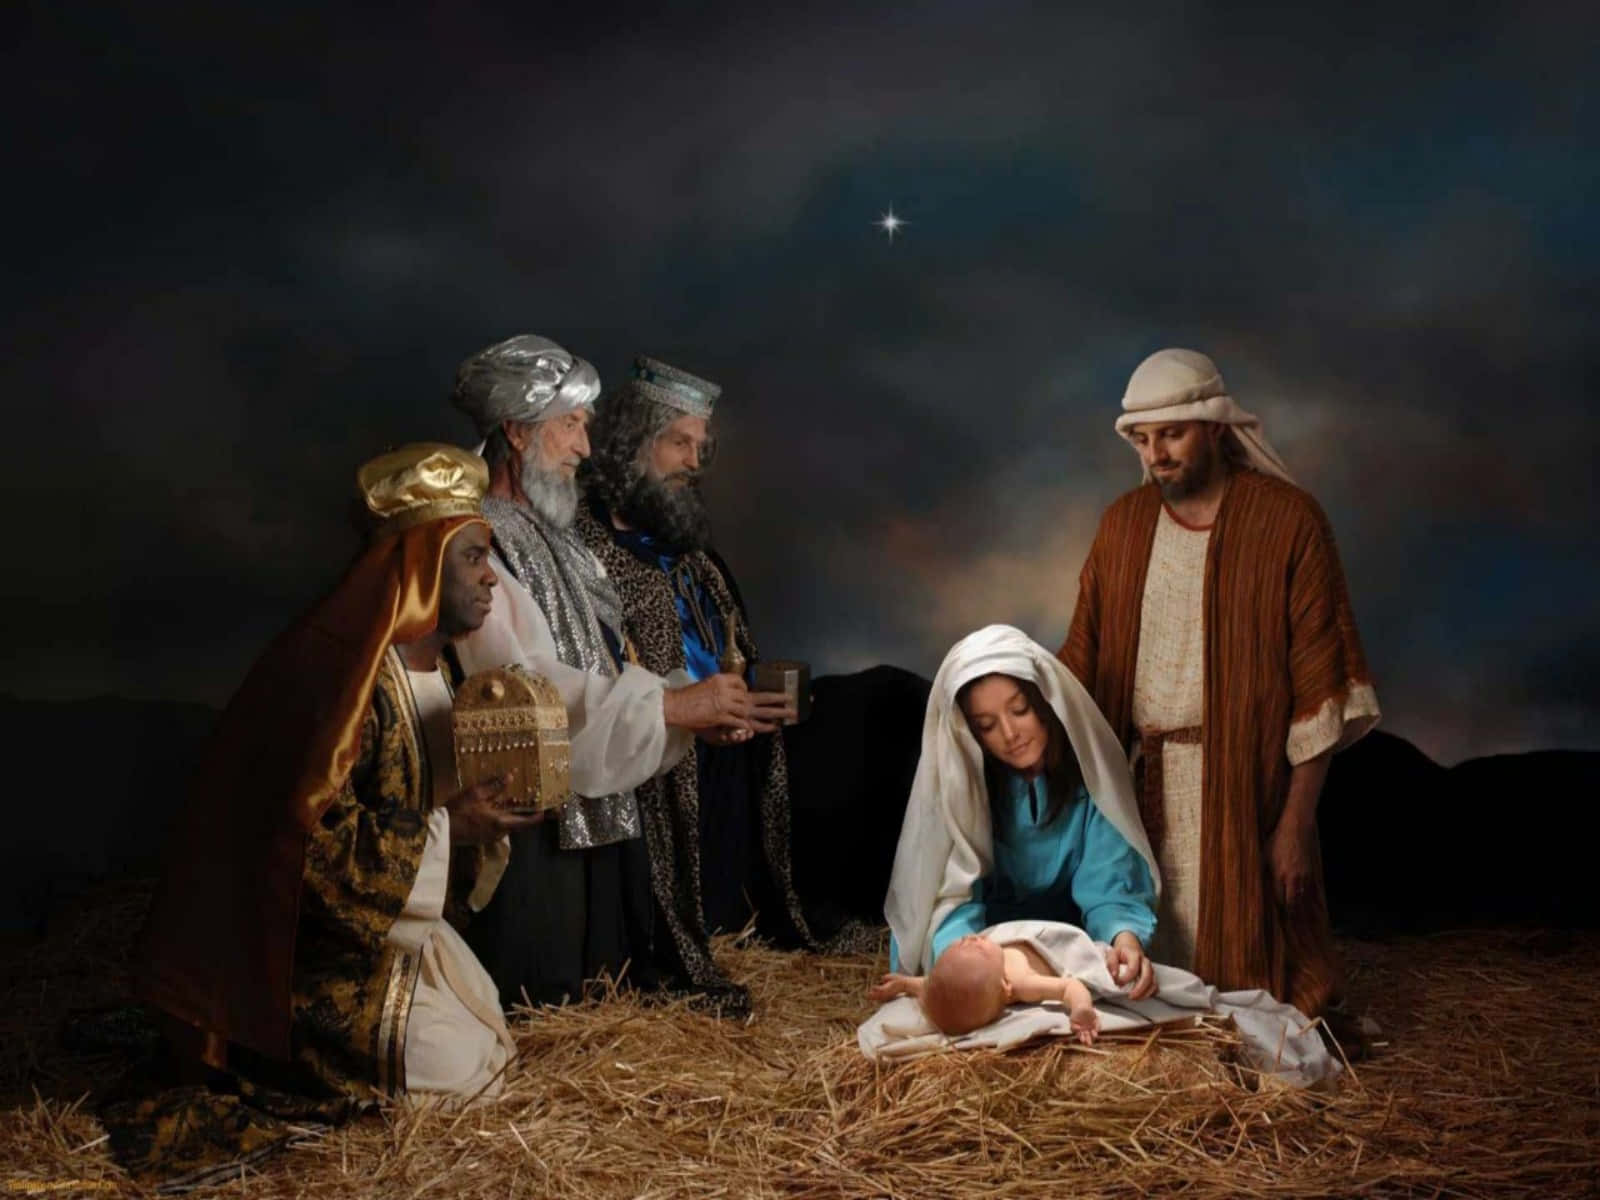 "Exquisite Nativity Scene Atop Mantle"